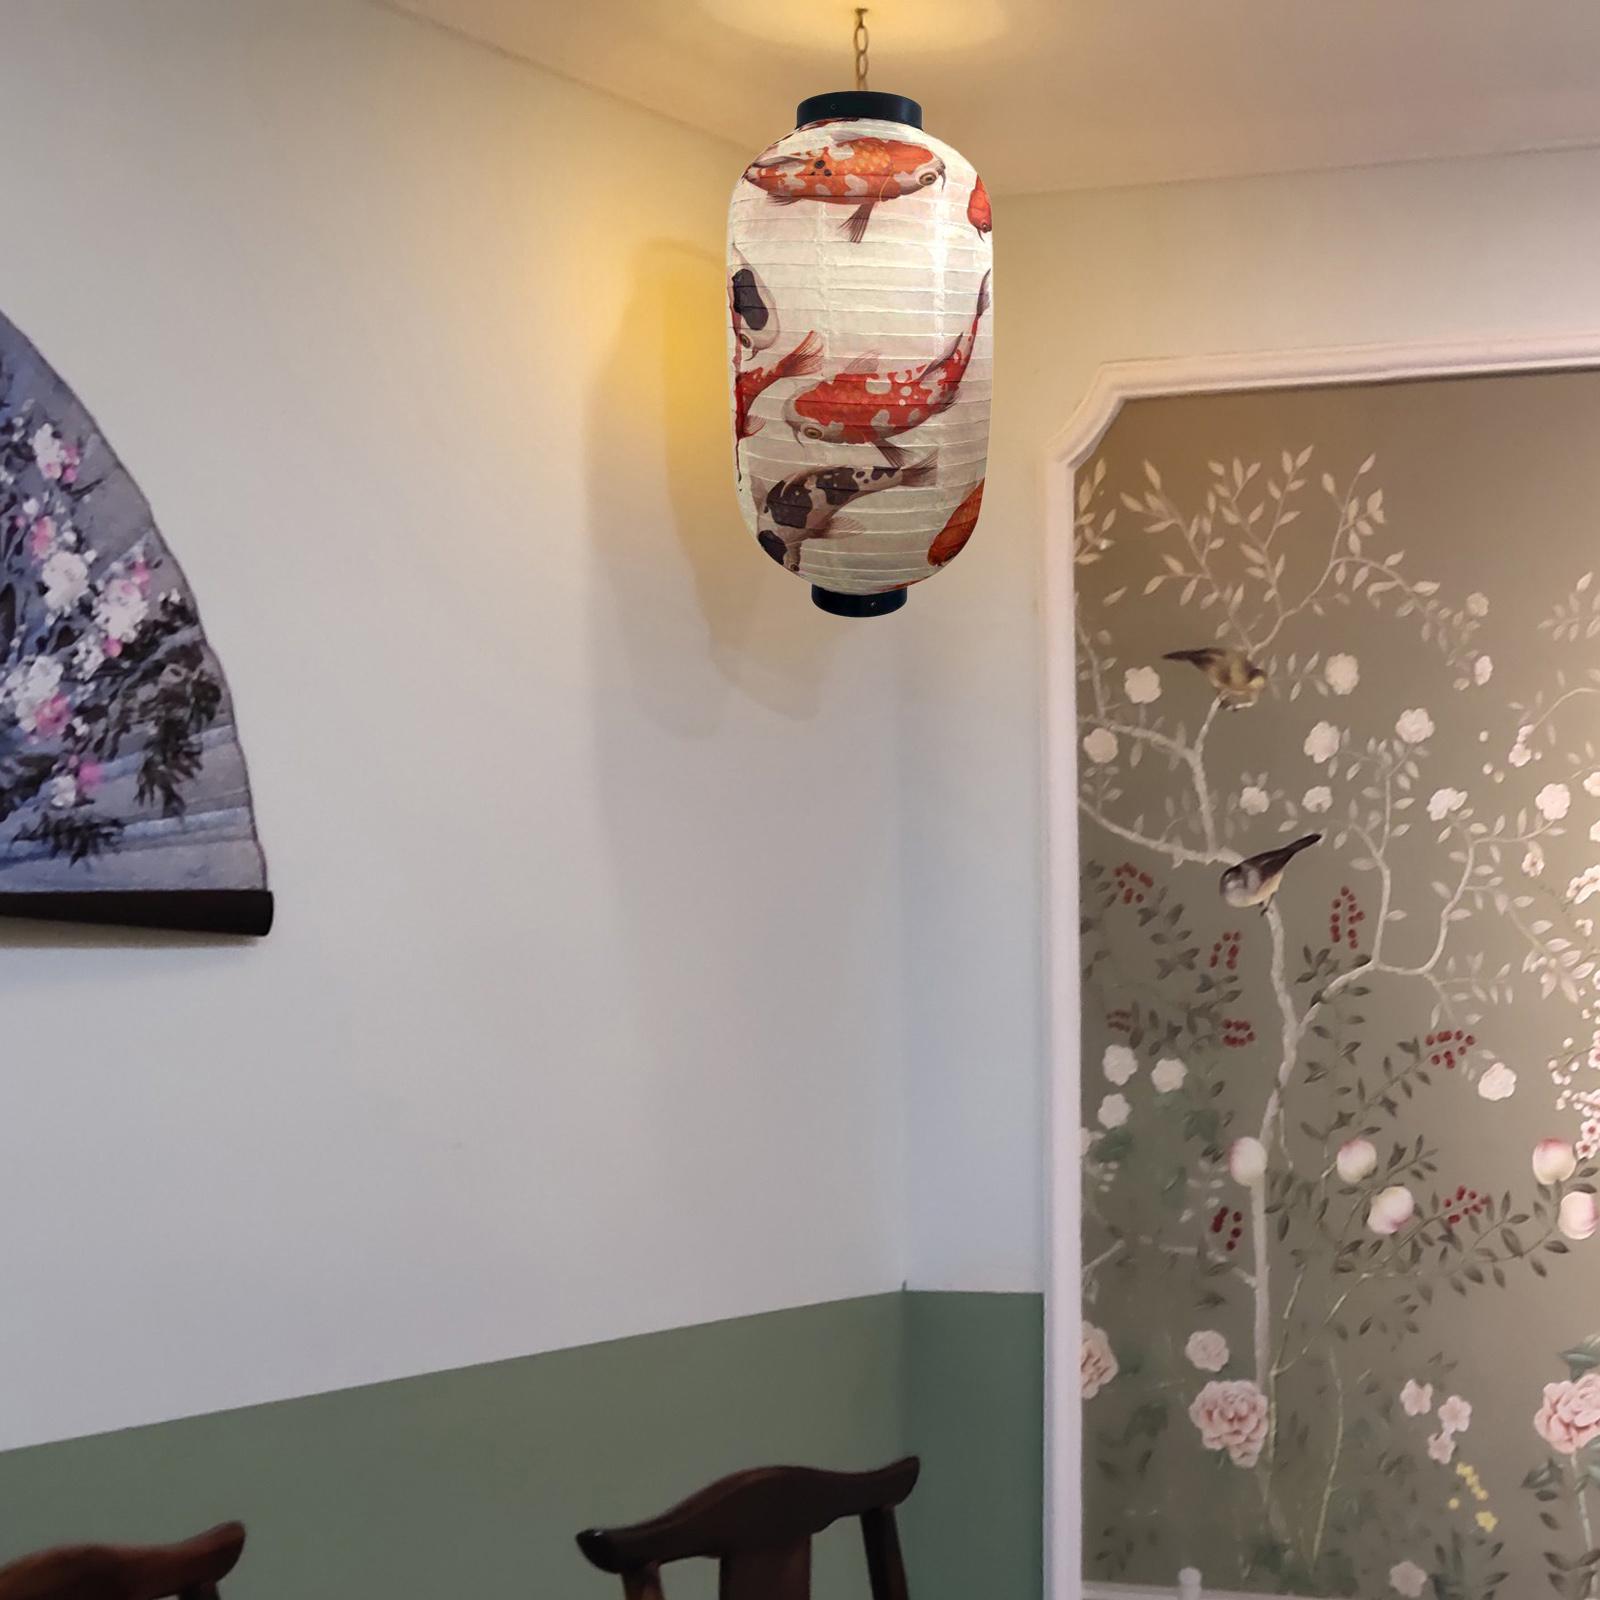 Lzakaya Restaurant Sign Lantern Japanese Bar Decorative Sushi Ramen Decor White 25x45cm